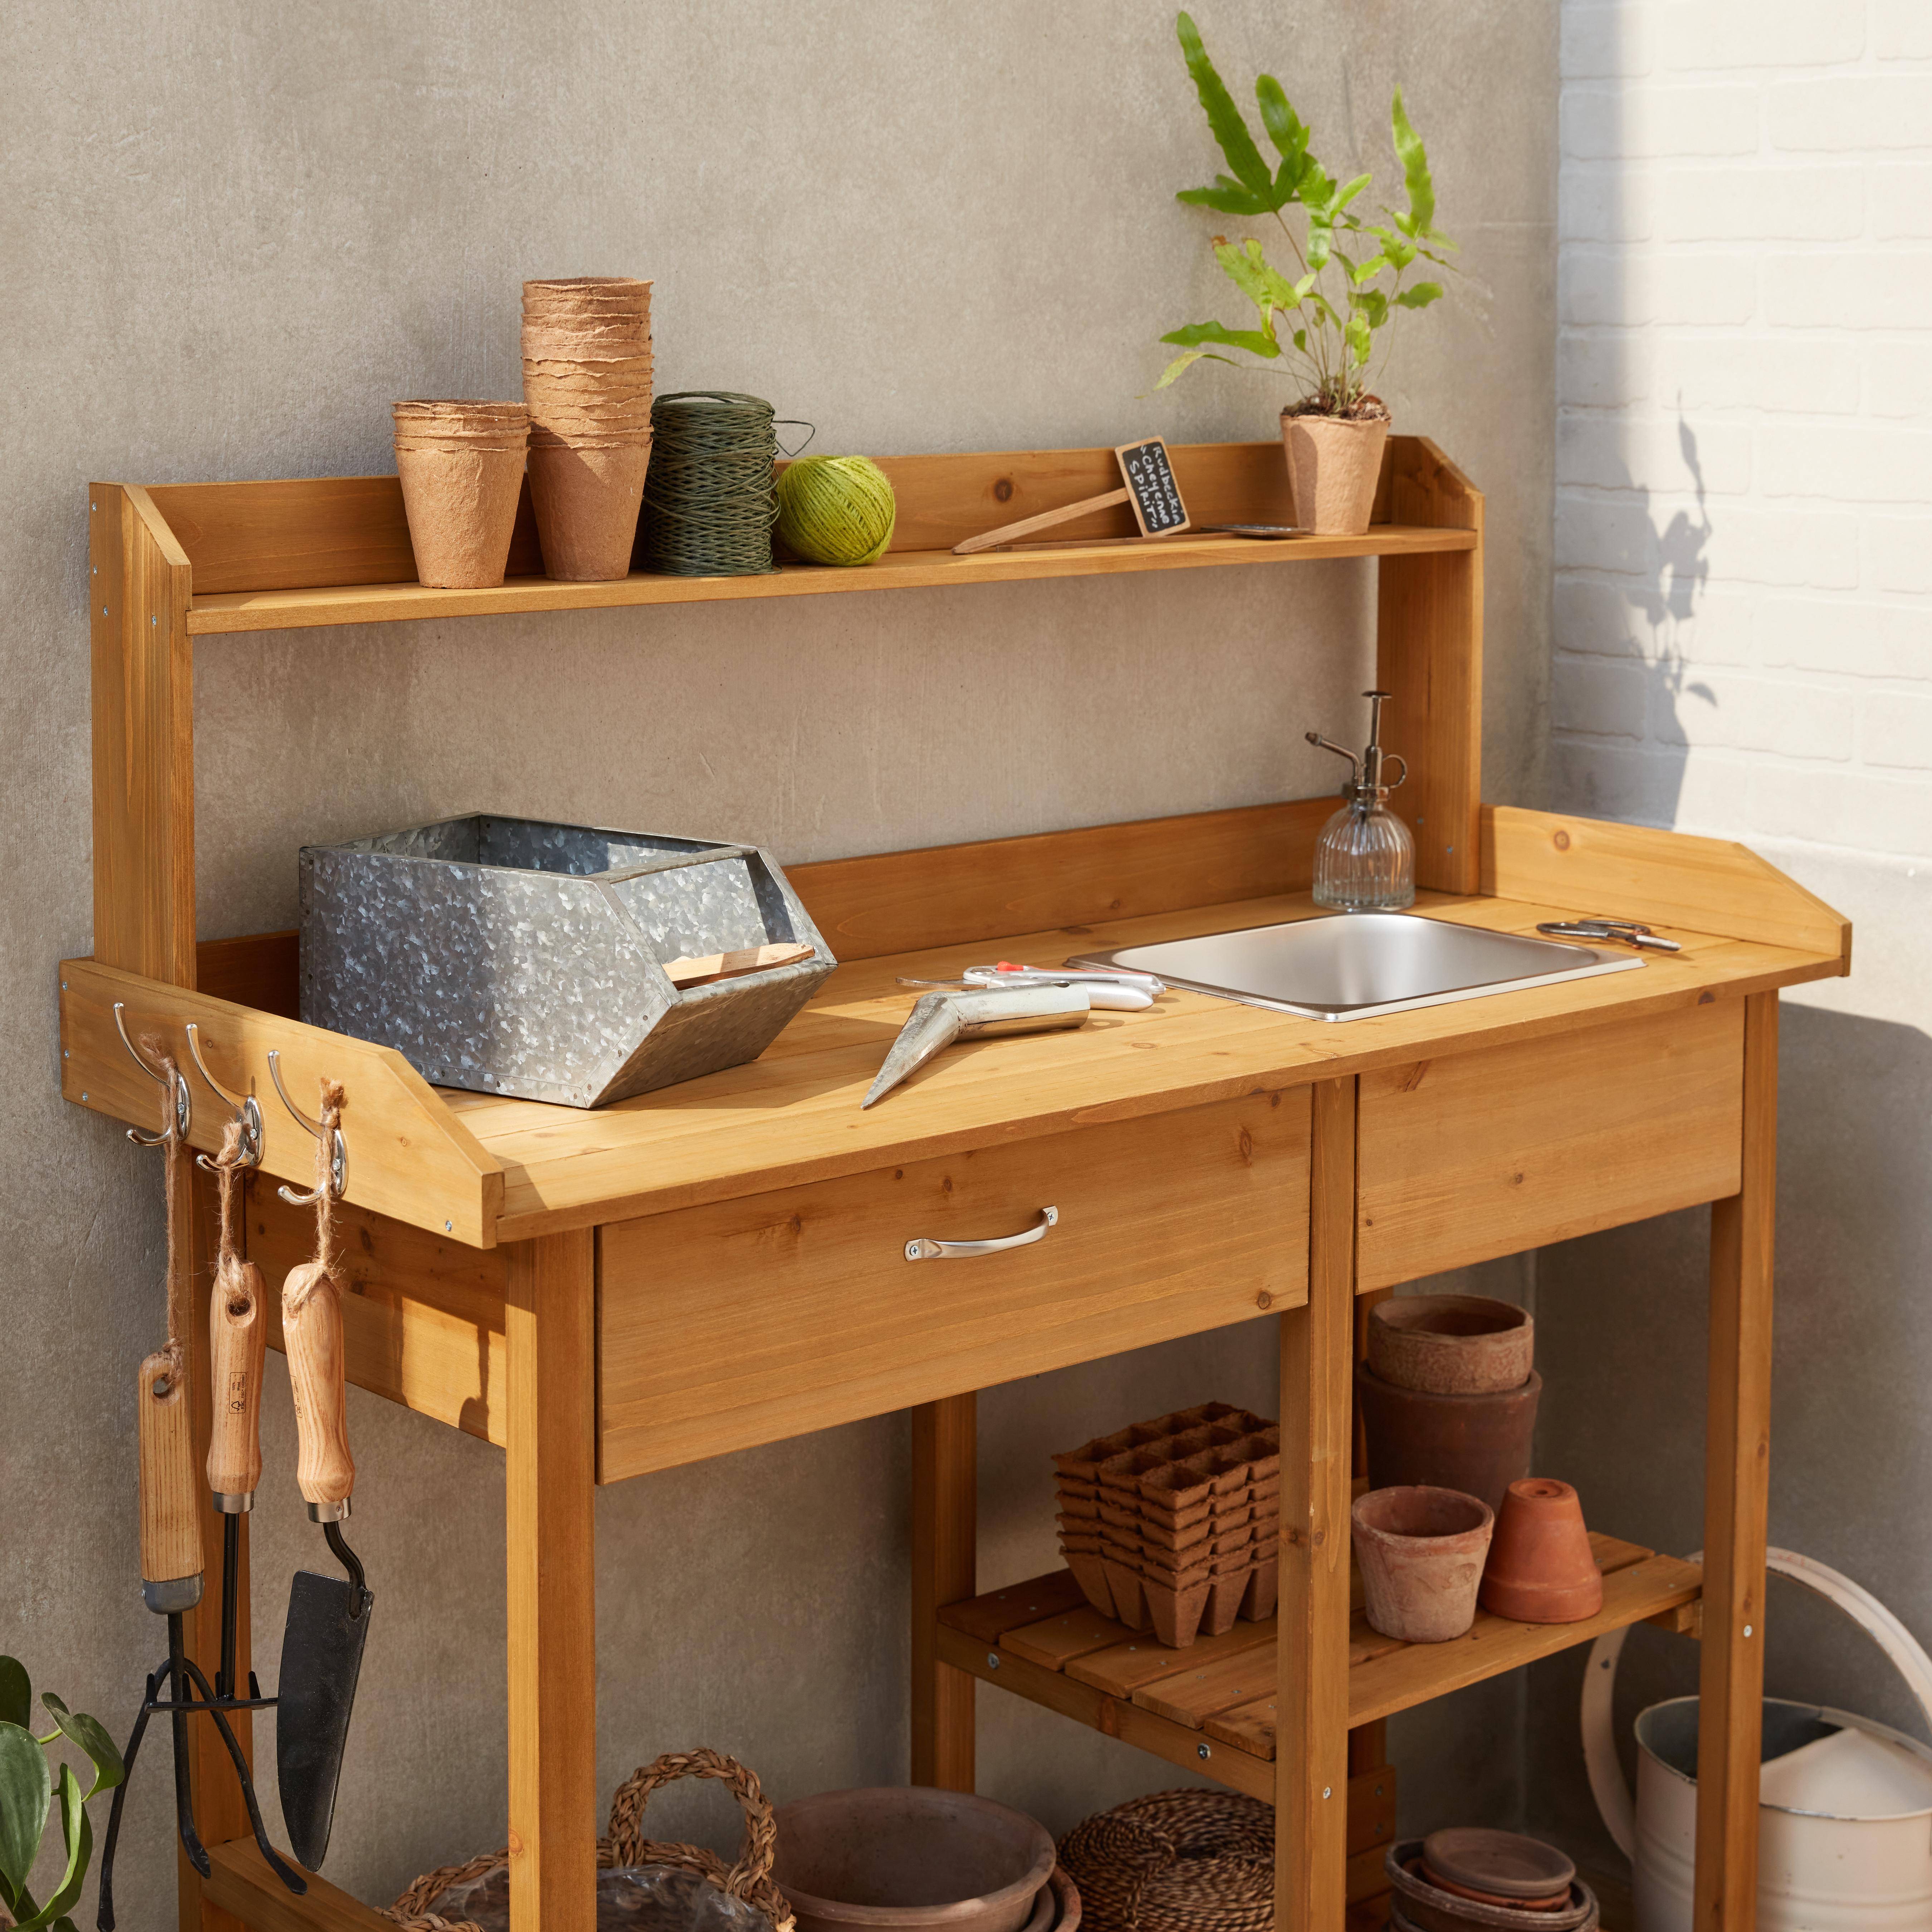 Capucine mesa de madera para macetas, 1 cajón, 2 estantes, 1 fregadero, ganchos,sweeek,Photo2